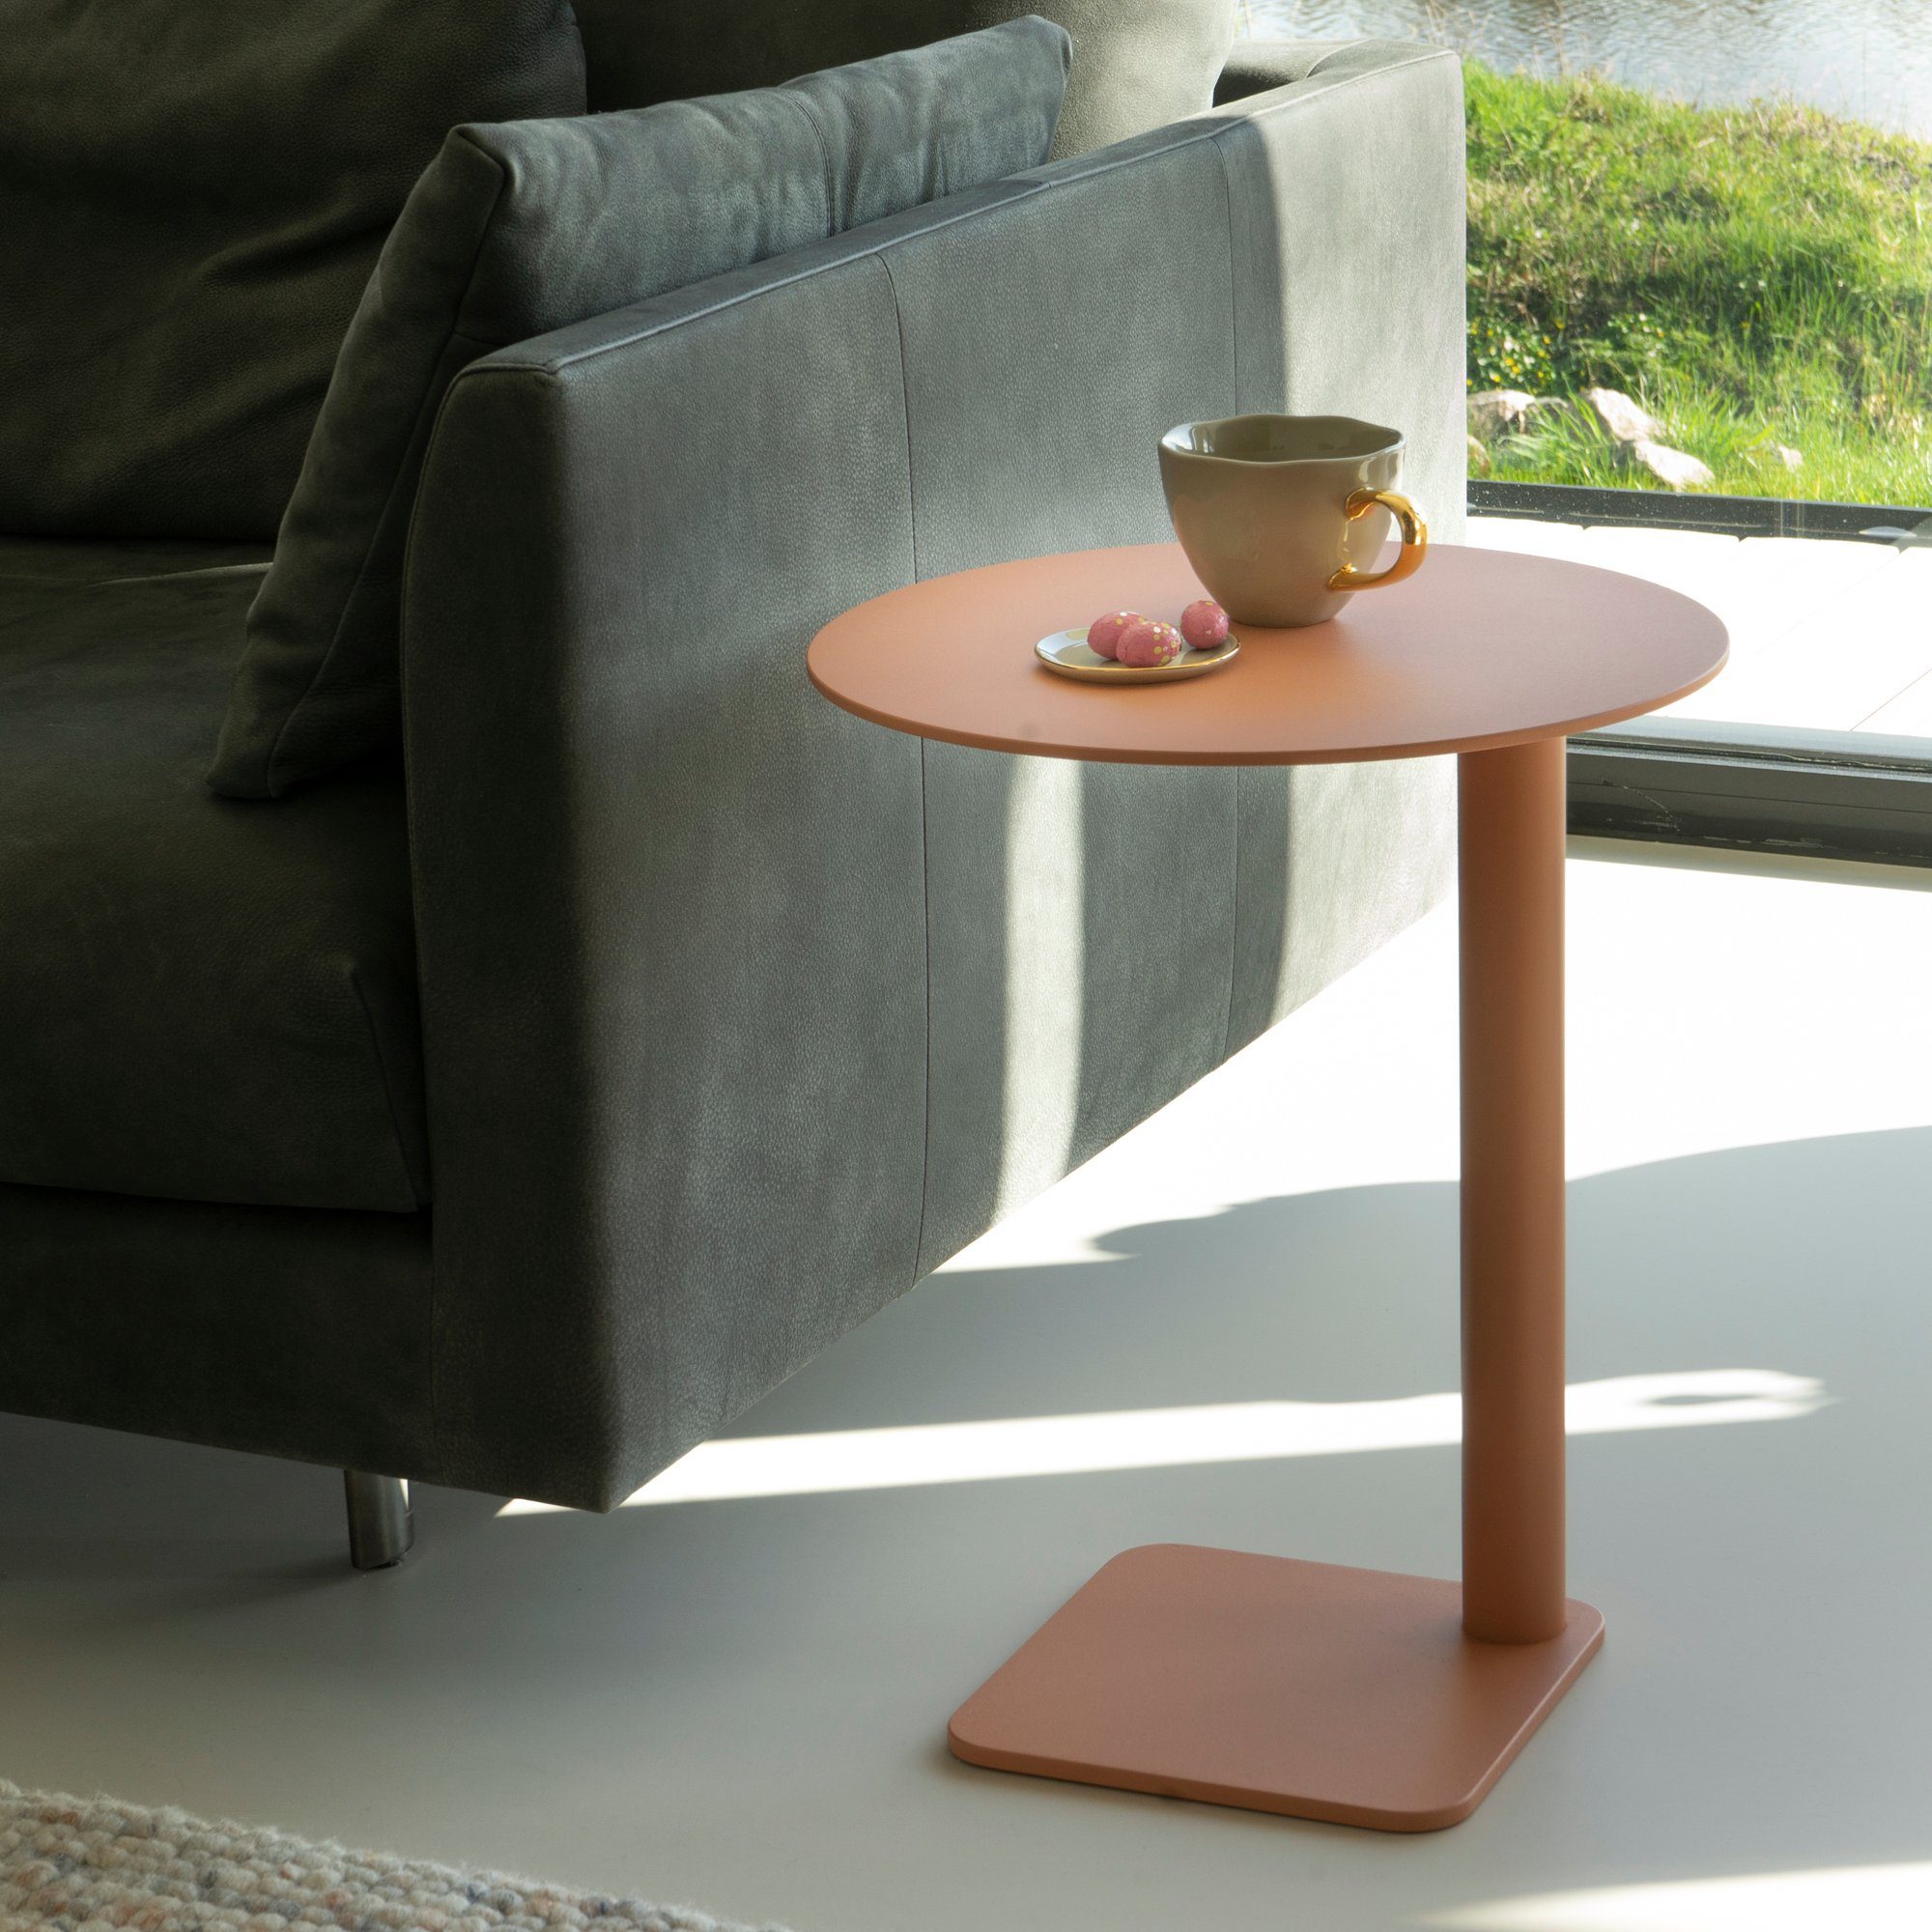 50 Torna - Beistelltisch 40x50x40cm Coral Torna Beistelltisch Design SUNSET Furniture